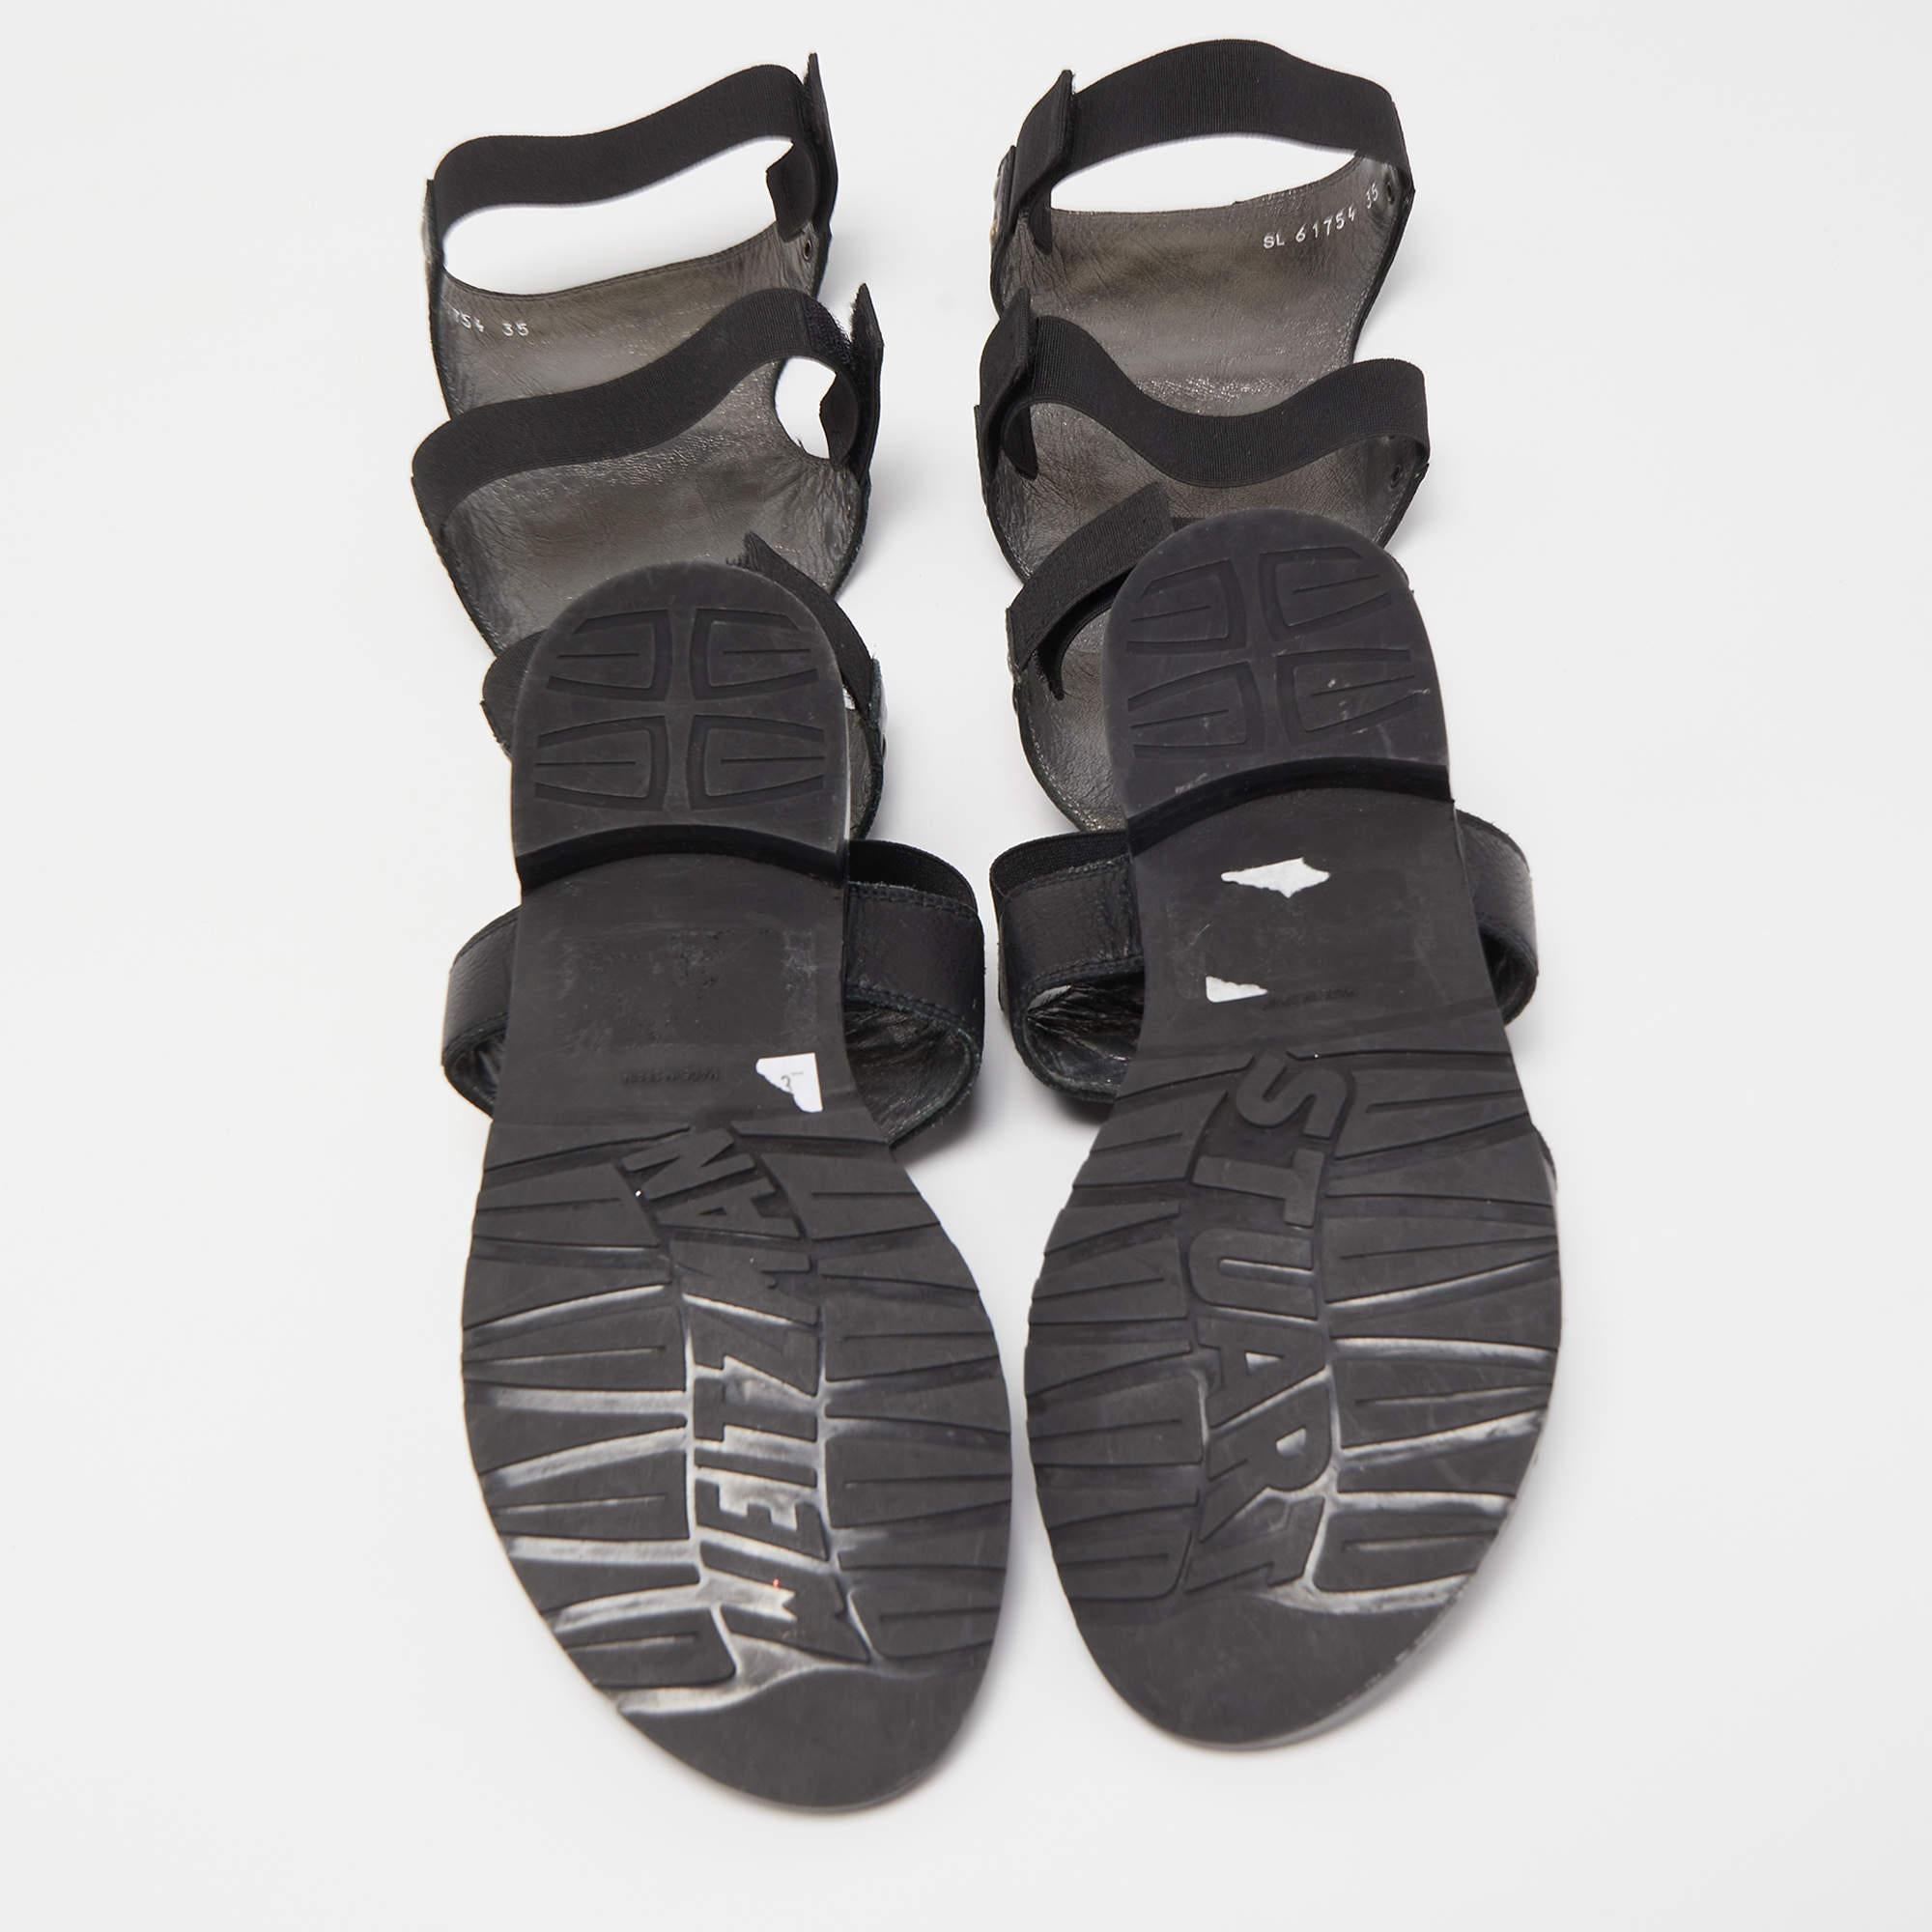 Stuart Weitzman Black Leather Gladiator Backview Sandals Size 35 3